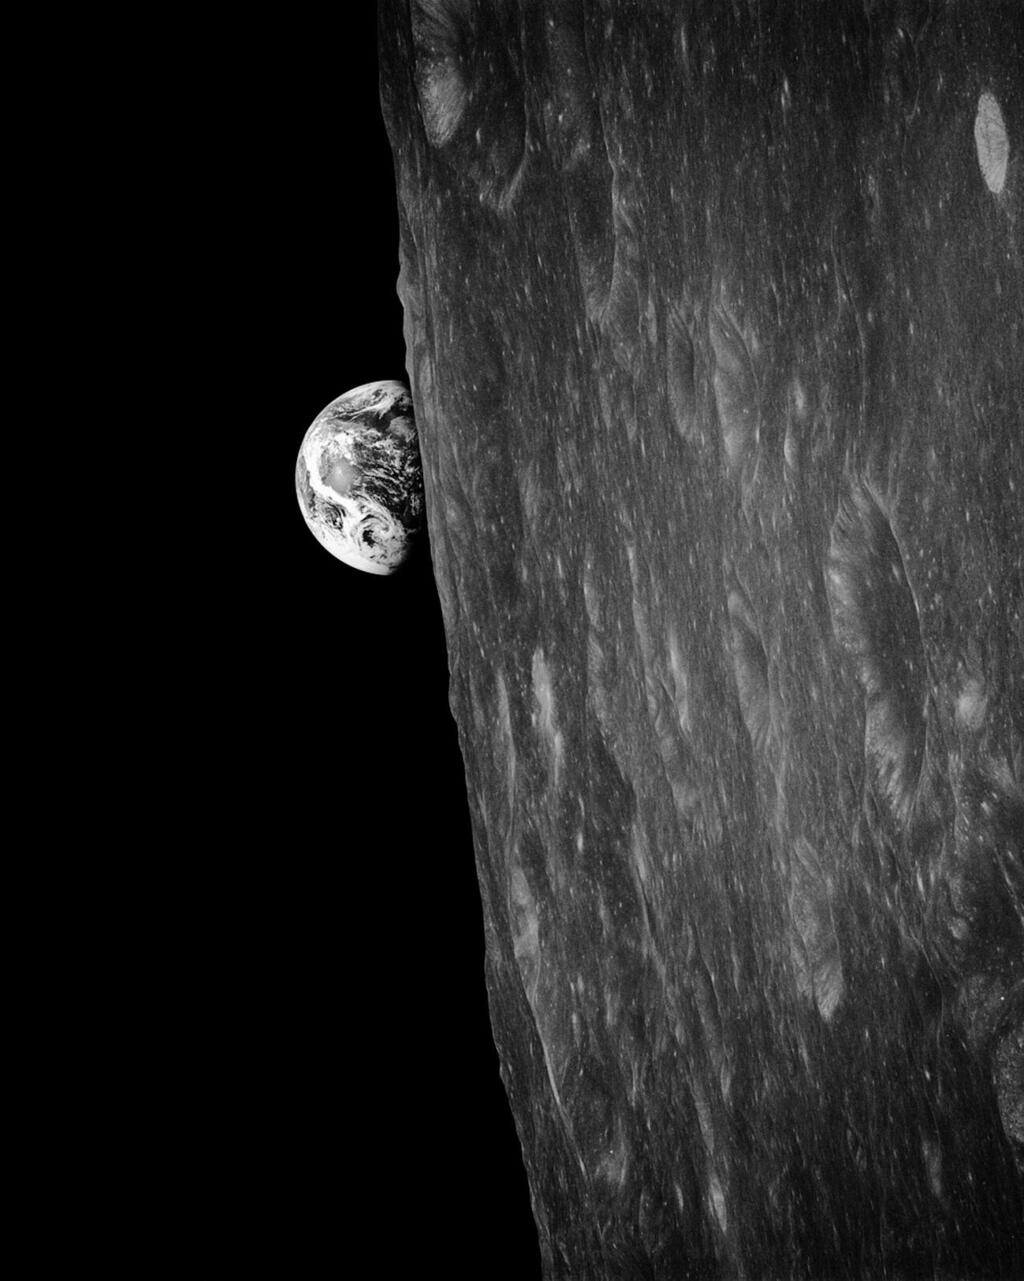 Earthrise, התמונה האיקונית שצולמה מ"אפולו 8"